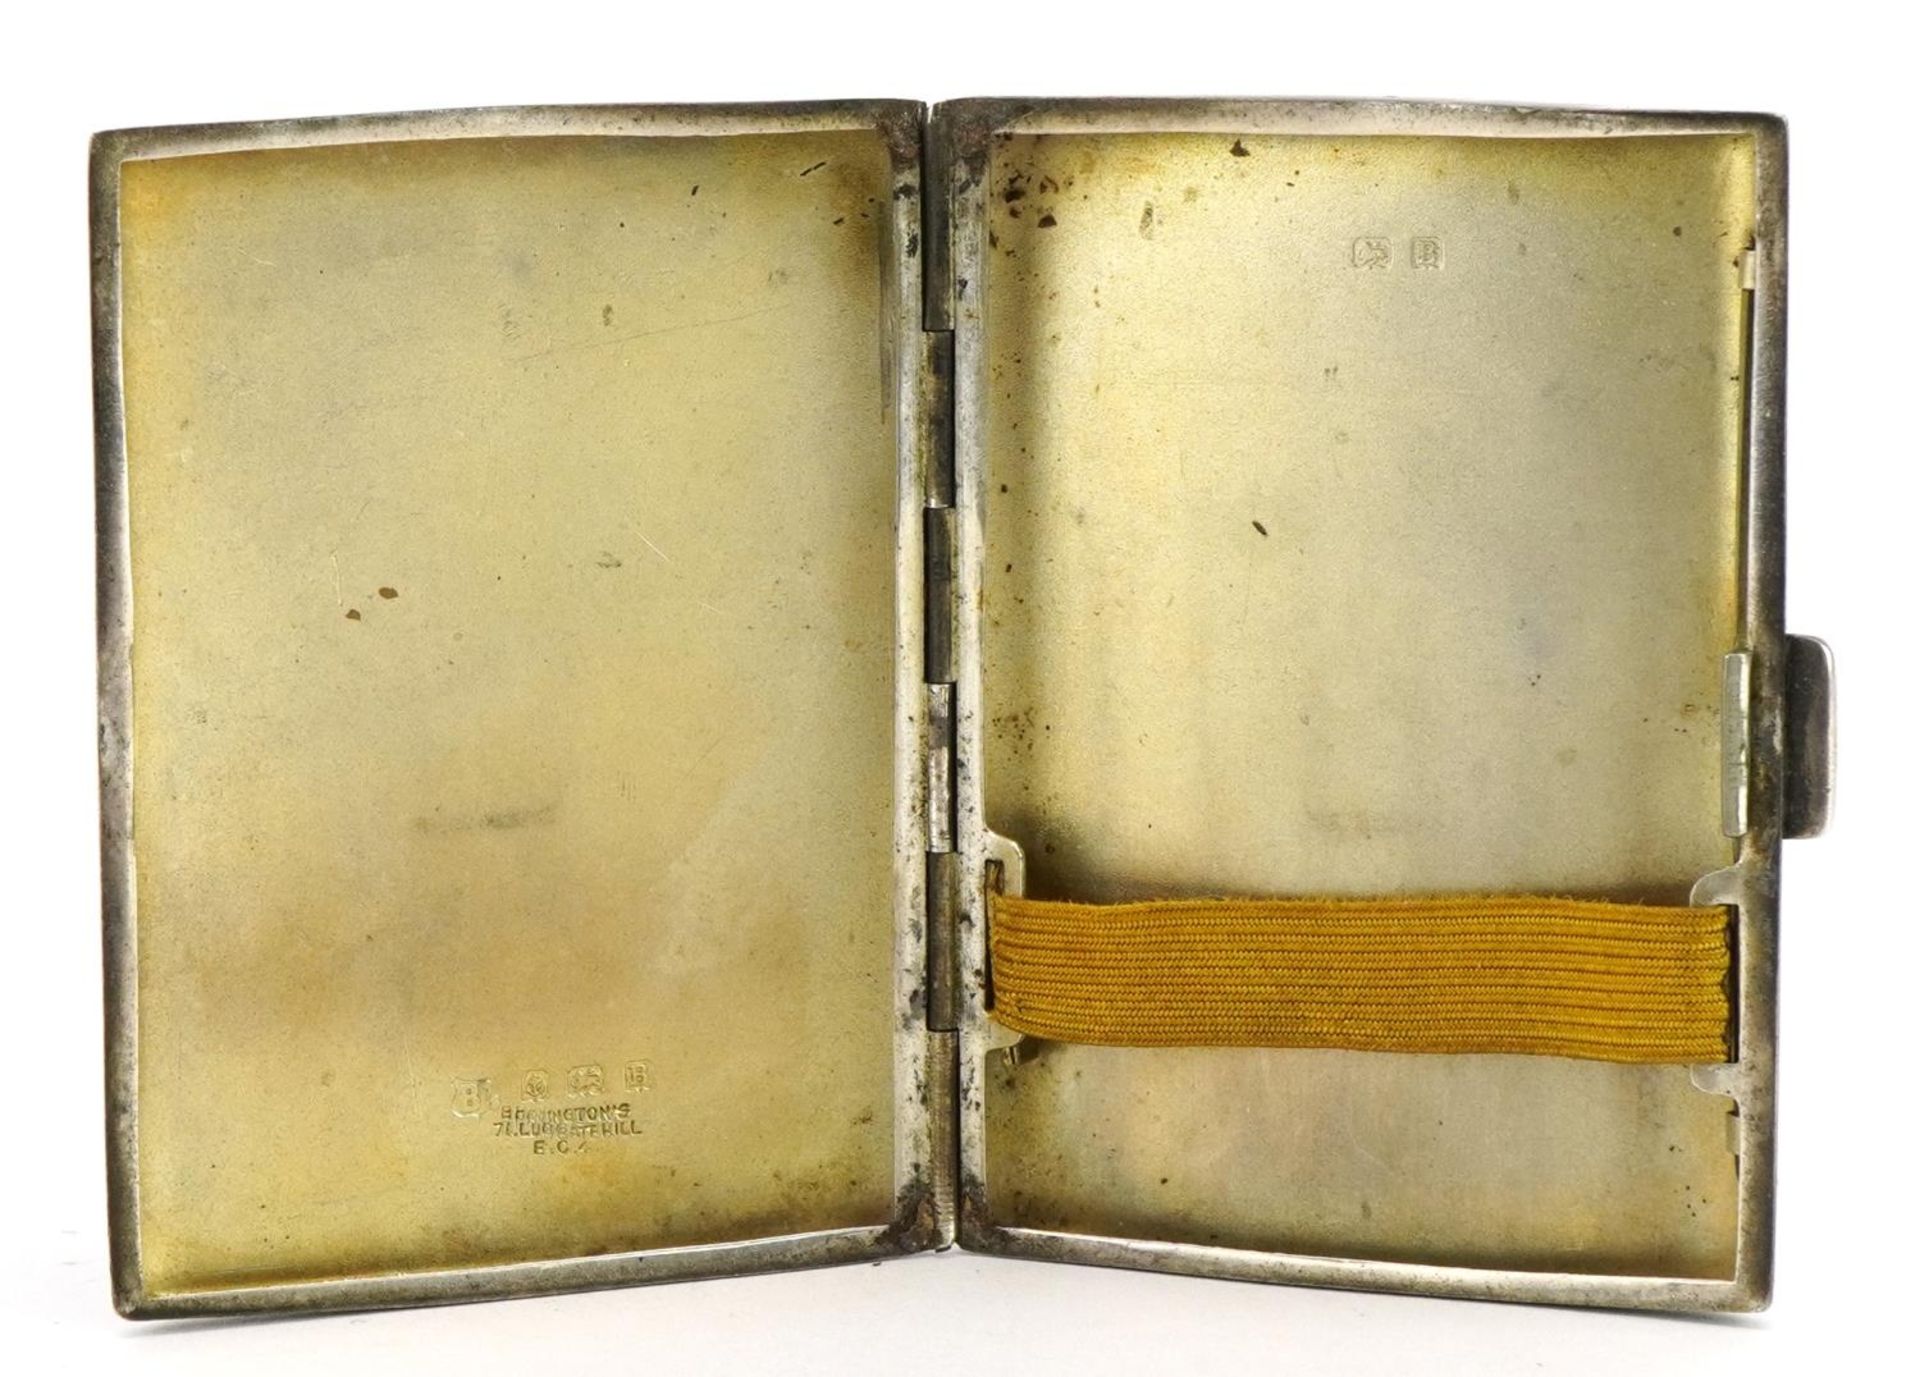 Bravingtons, George V rectangular silver cigarette case with engine turned decoration, Birmingham - Image 2 of 4